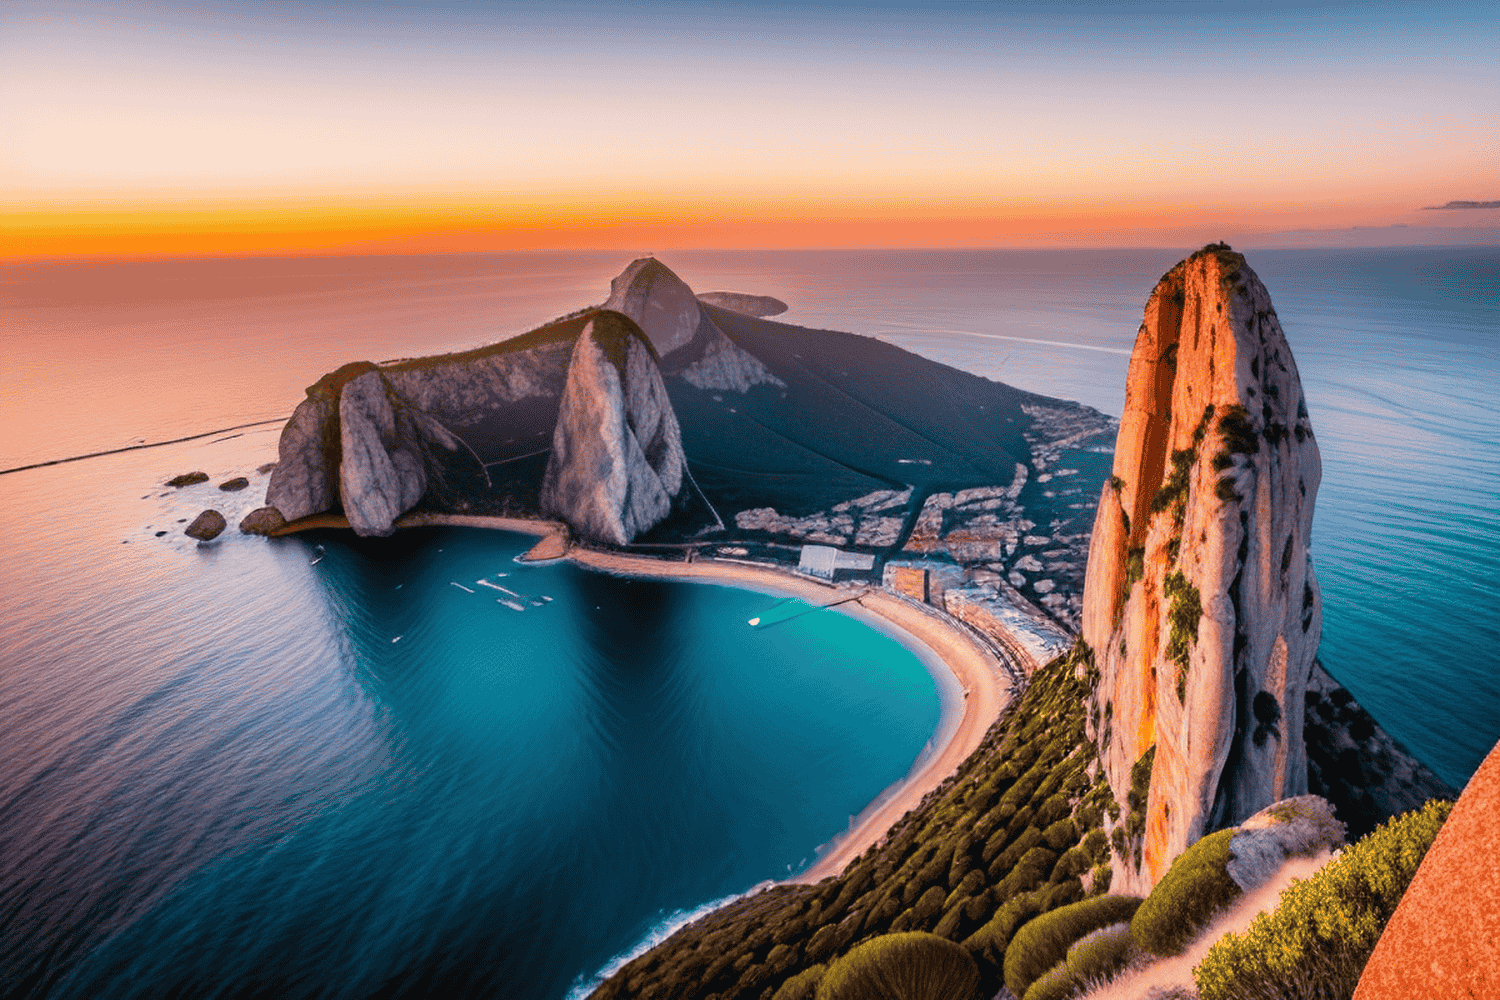 Information about Gibraltar